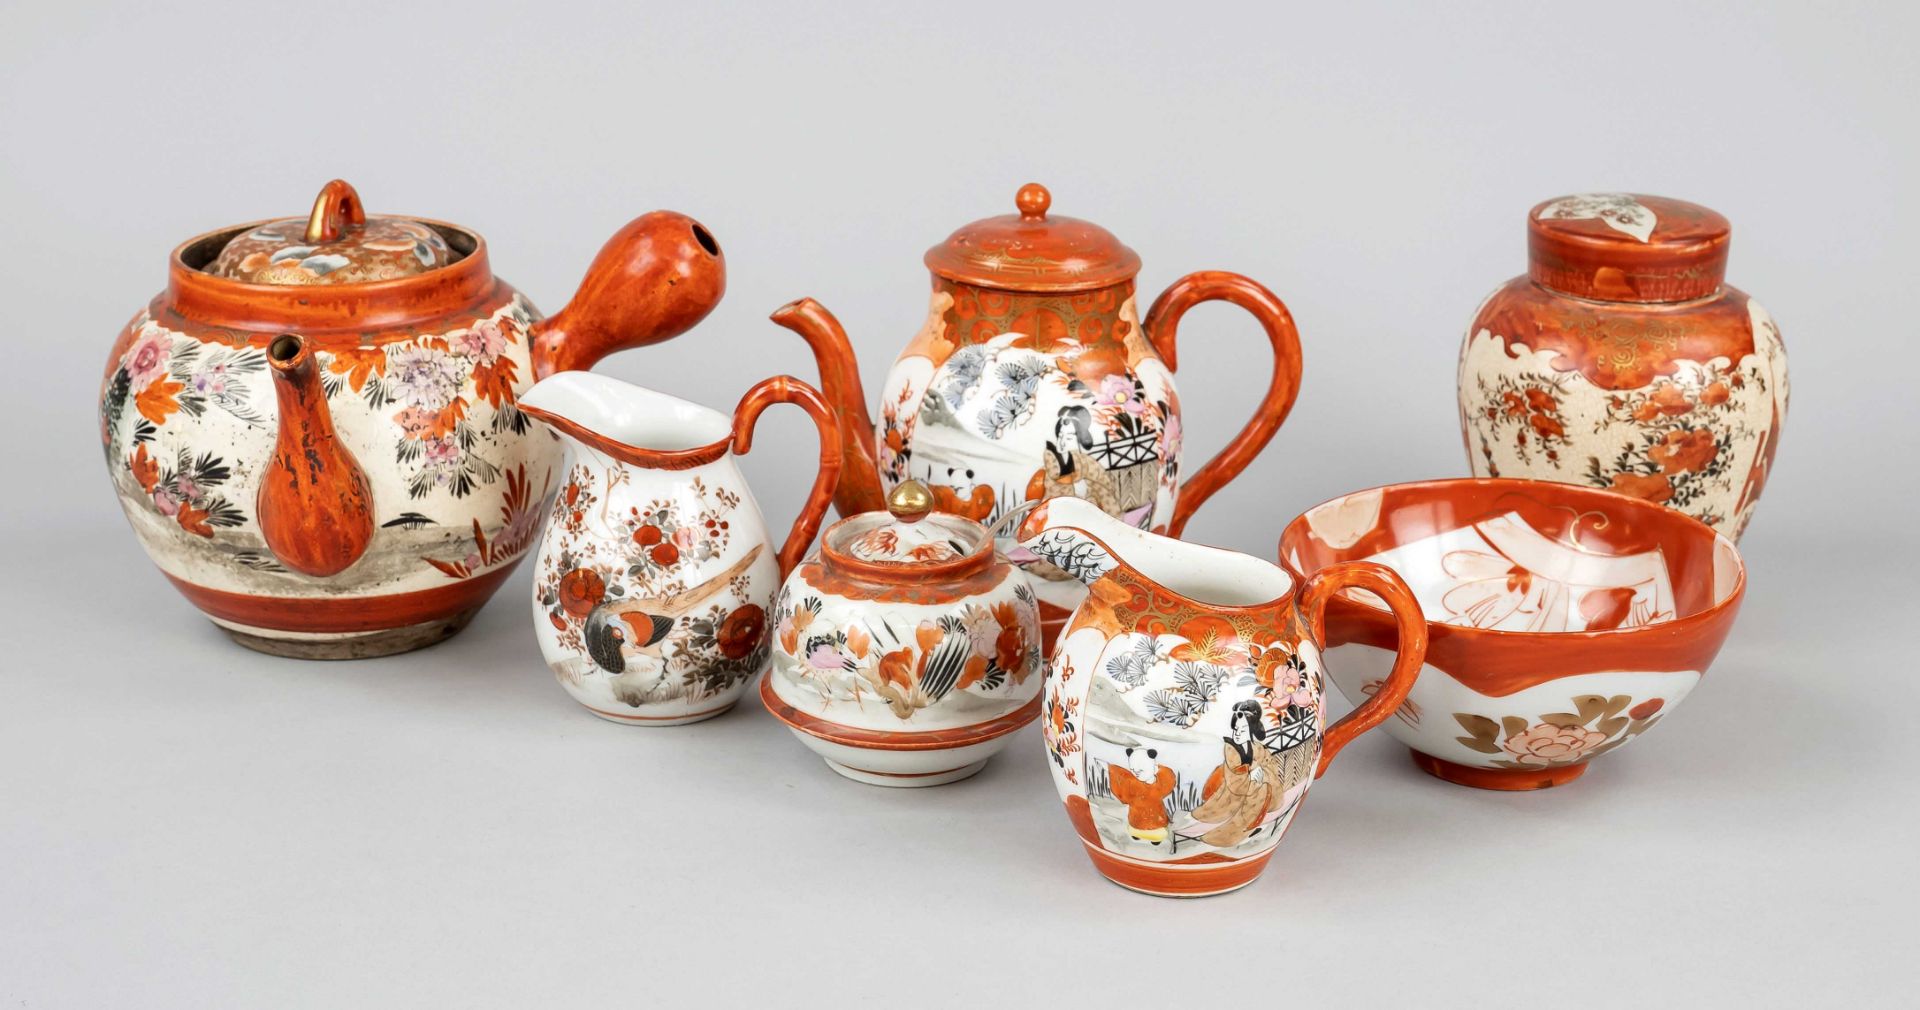 7 pieces Kutani, Japan, Meiji period(1868-1912), around 1900, porcelain with dominant iron-red